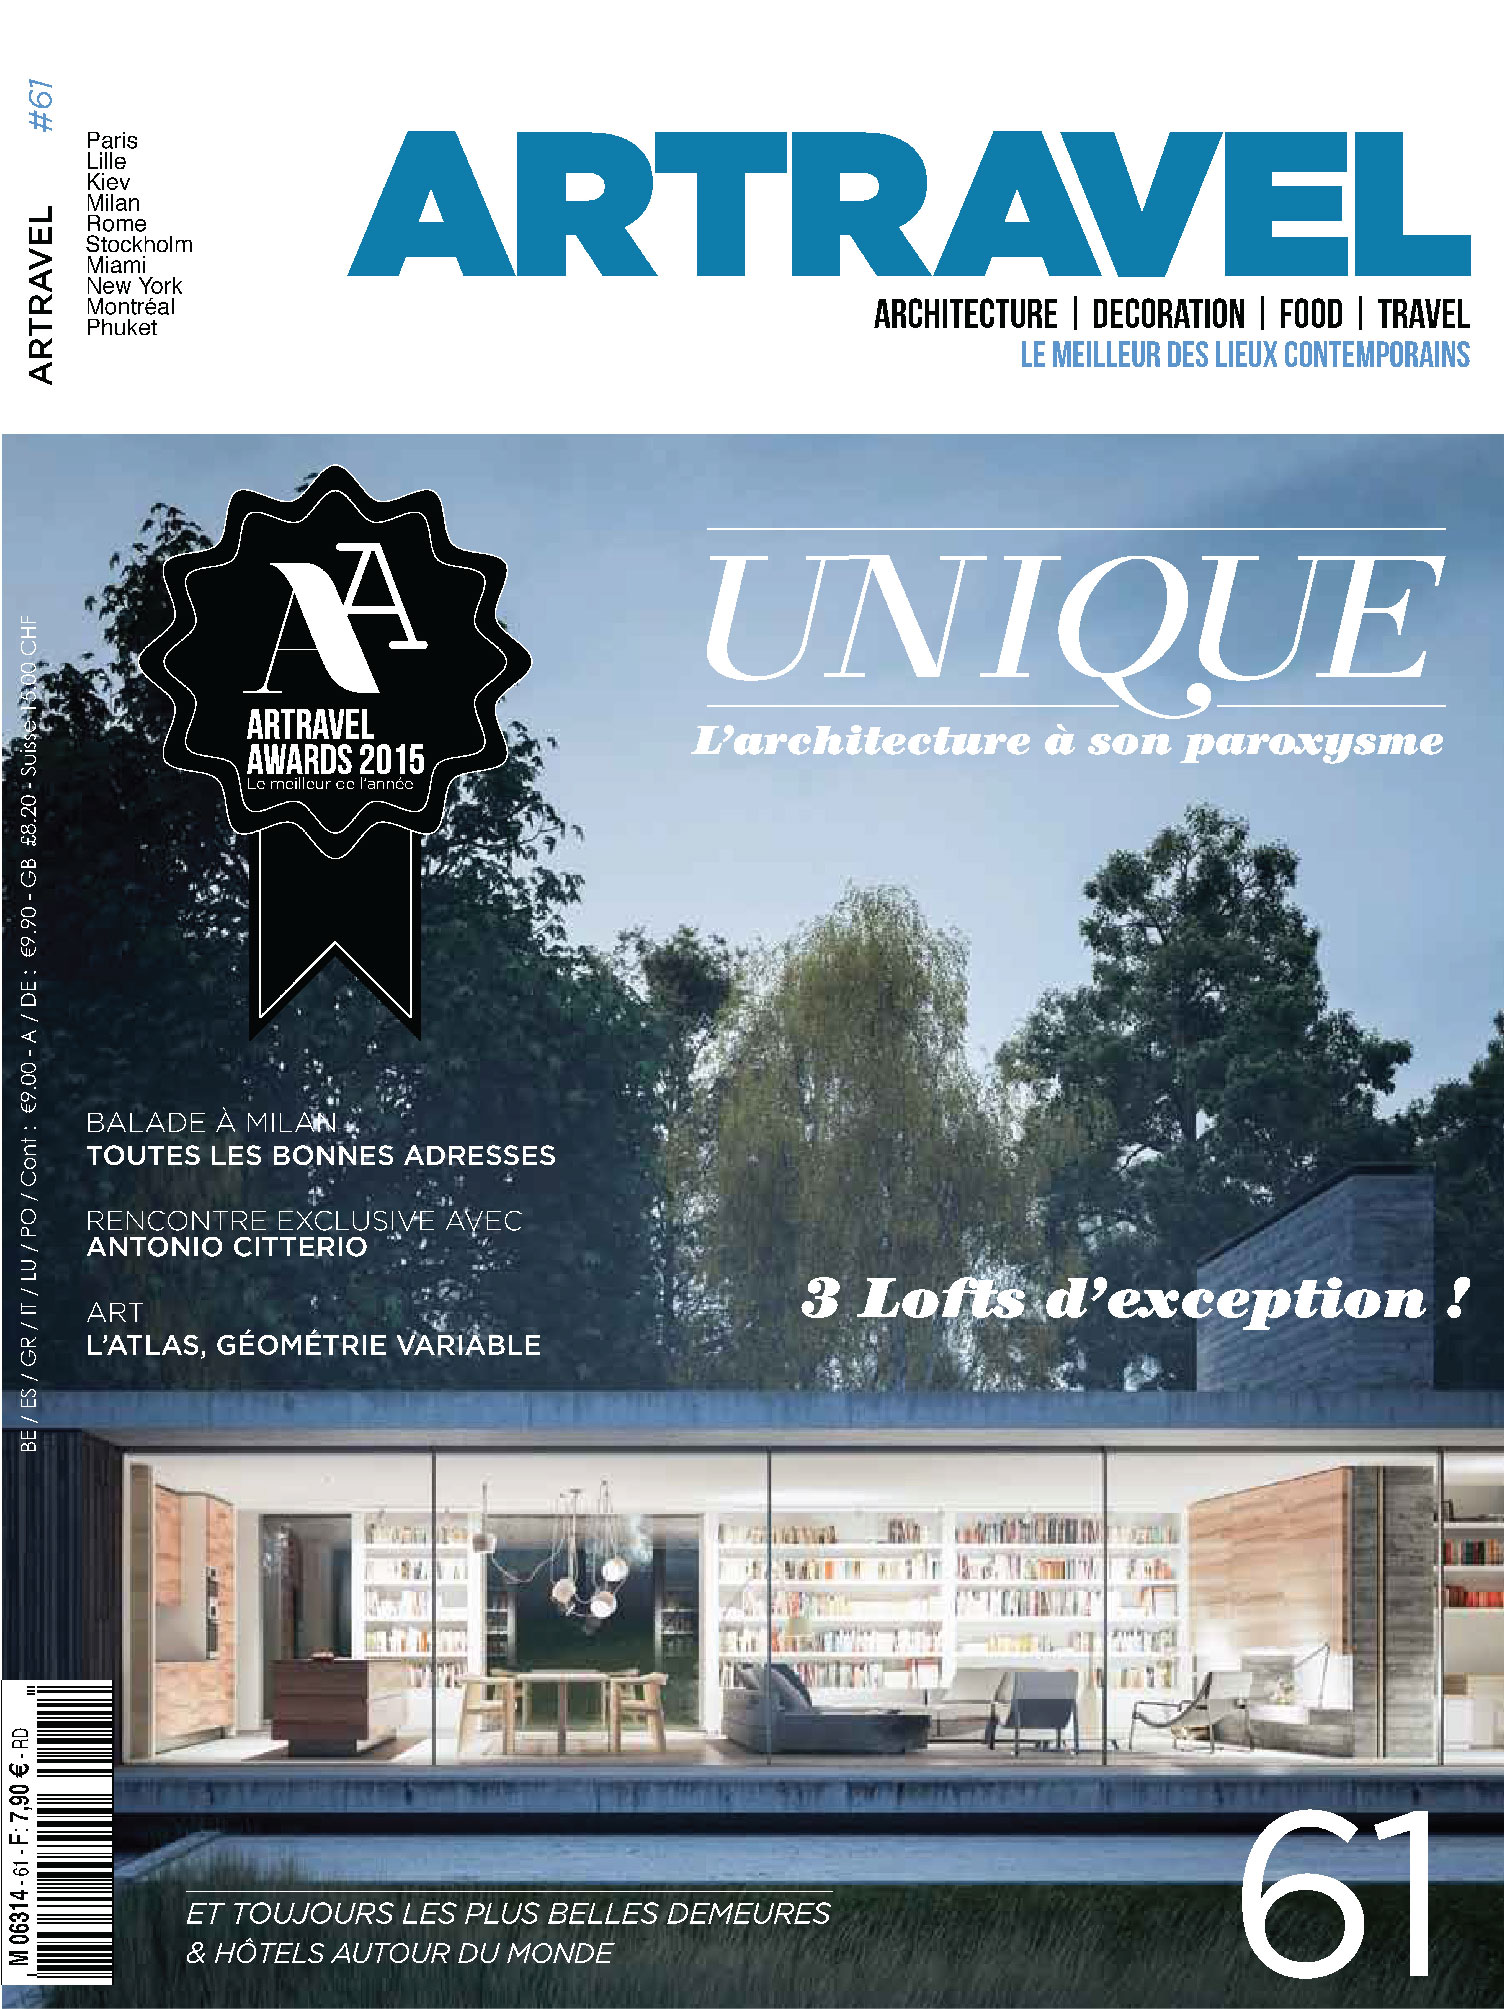 cover of the magazine artravel february 2015